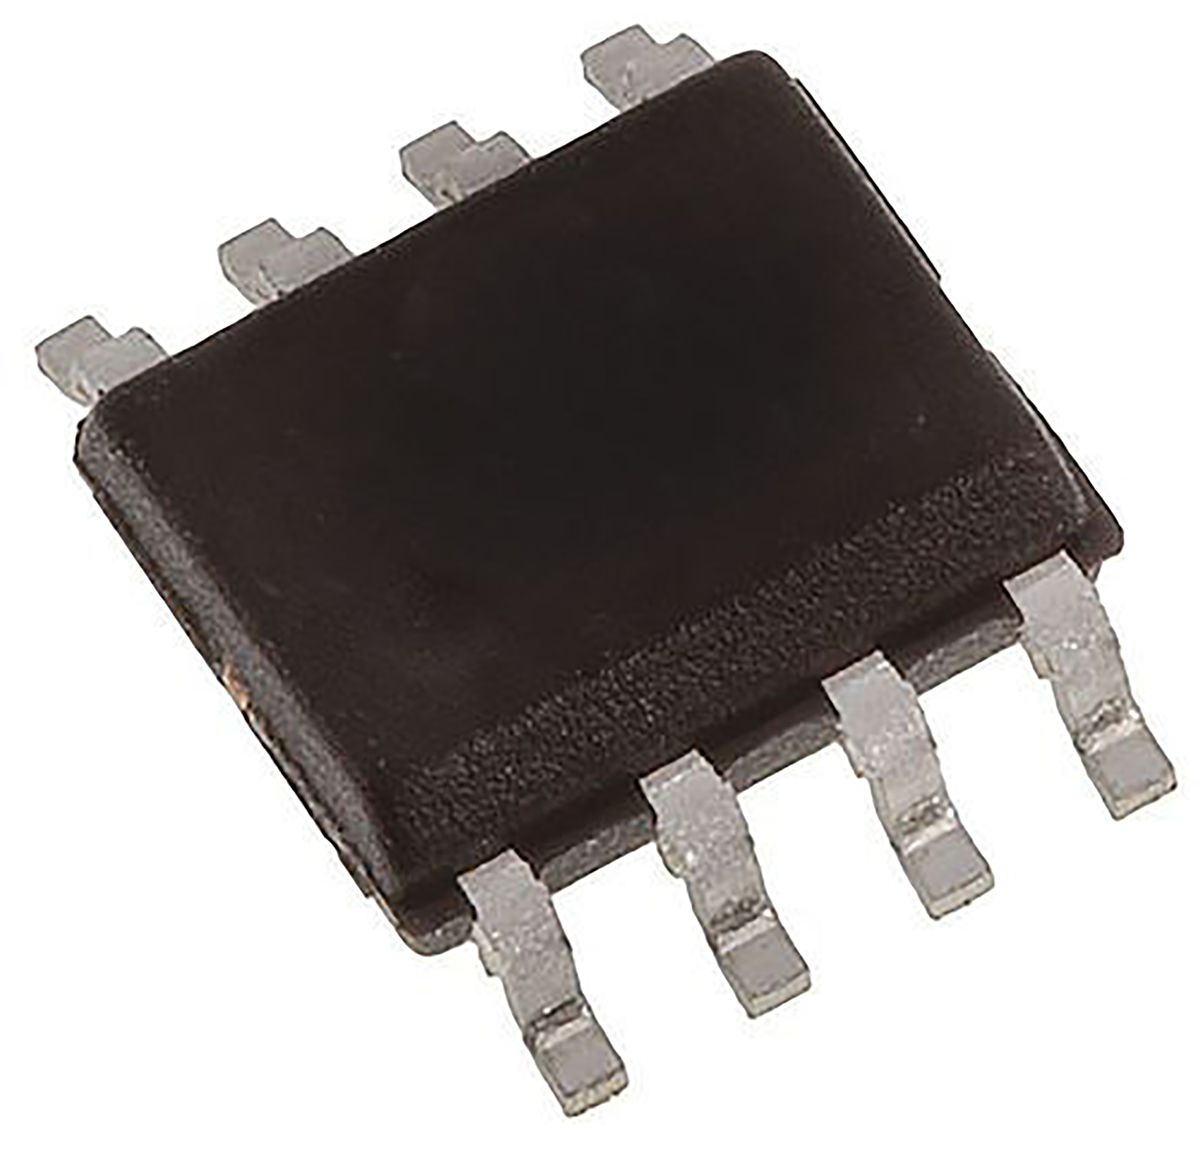 Texas Instruments Dual Peripheral Driver 8-Pin SOIC, SN75452BD